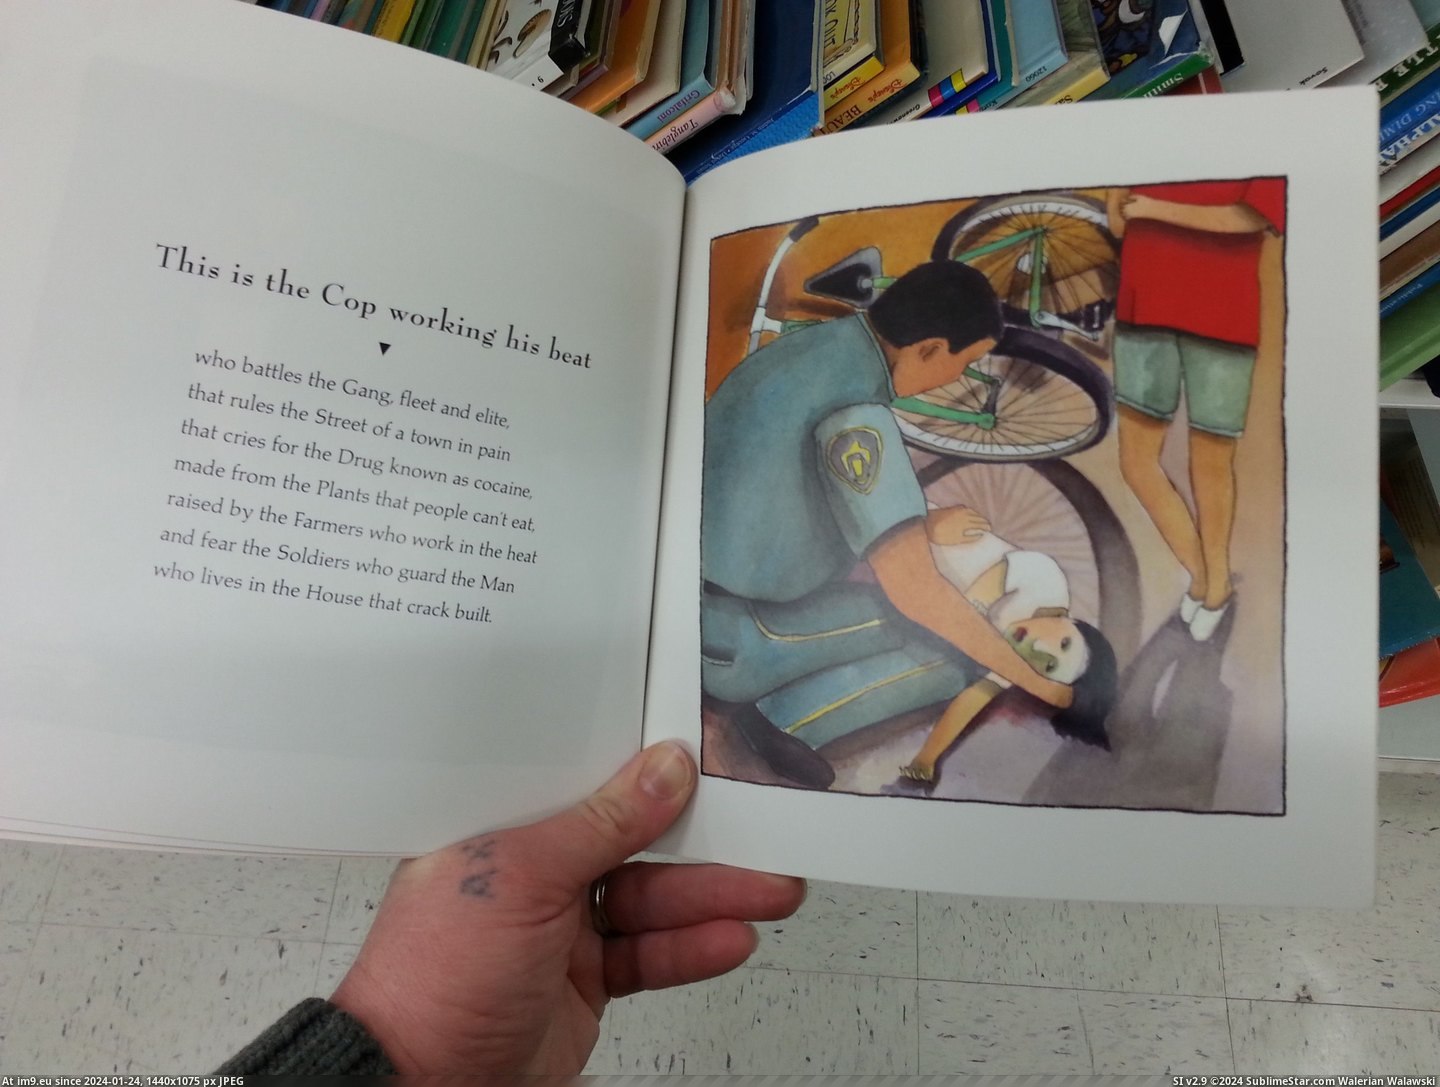 #Wtf #Store #Thrift #Crack #Book #Children [Wtf] Found this children's book about crack at a thrift store today 2 Pic. (Изображение из альбом My r/WTF favs))